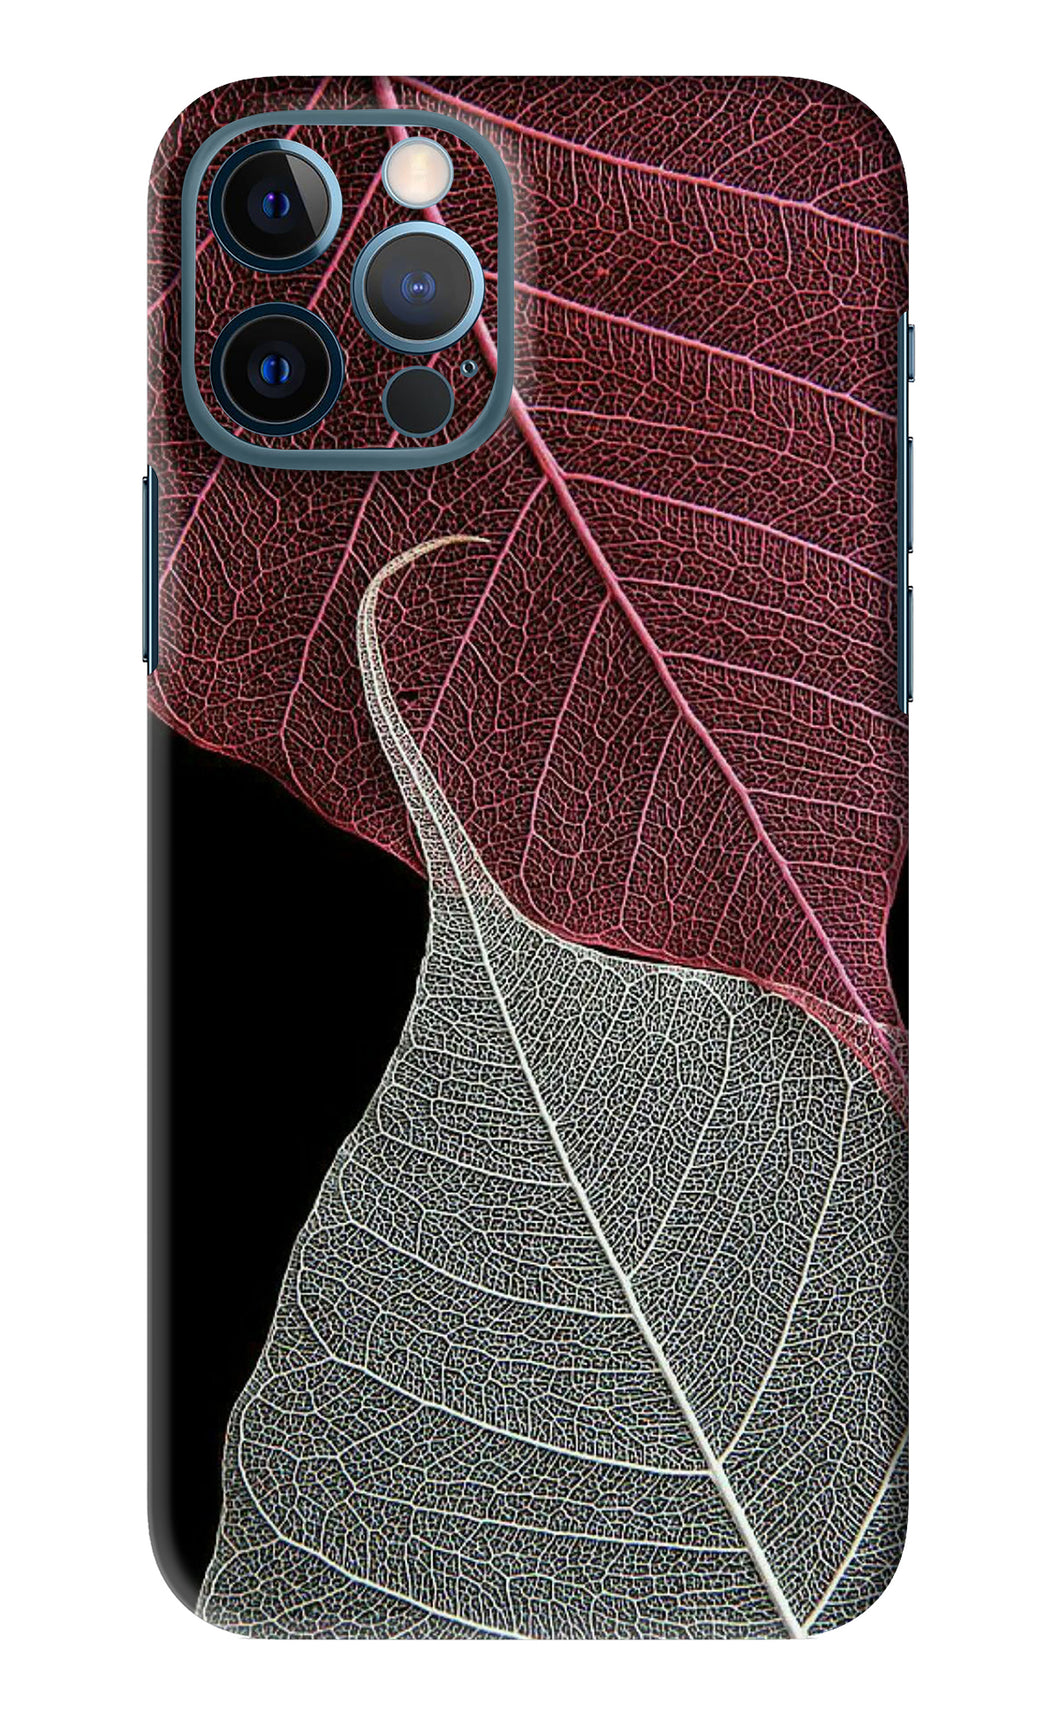 Leaf Pattern iPhone 12 Pro Back Skin Wrap